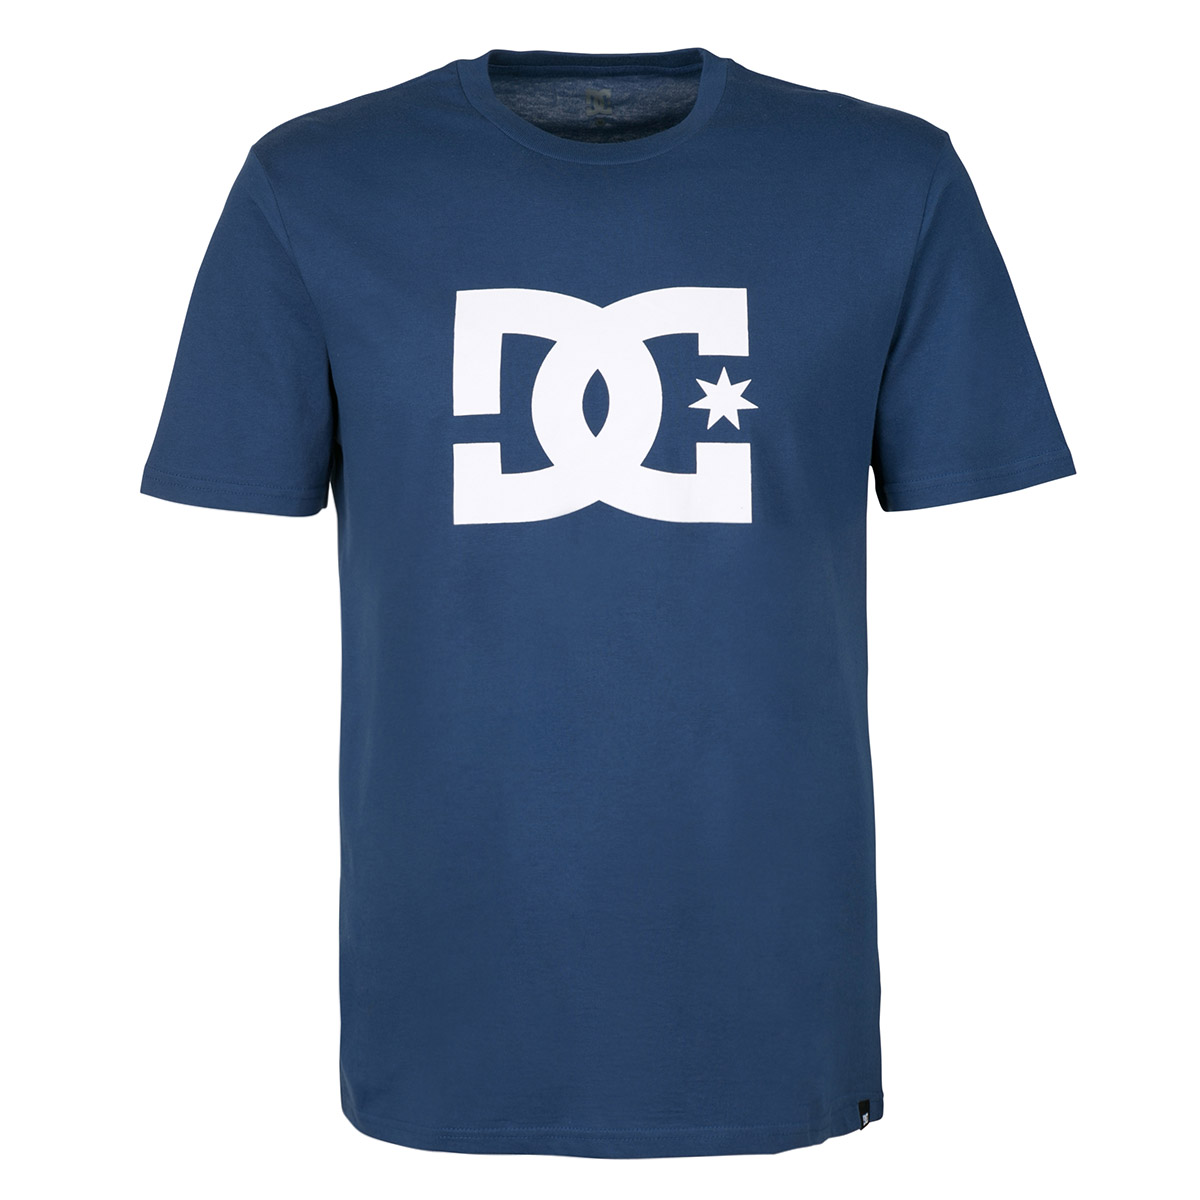 DC T-Shirt Star Washed Indigo